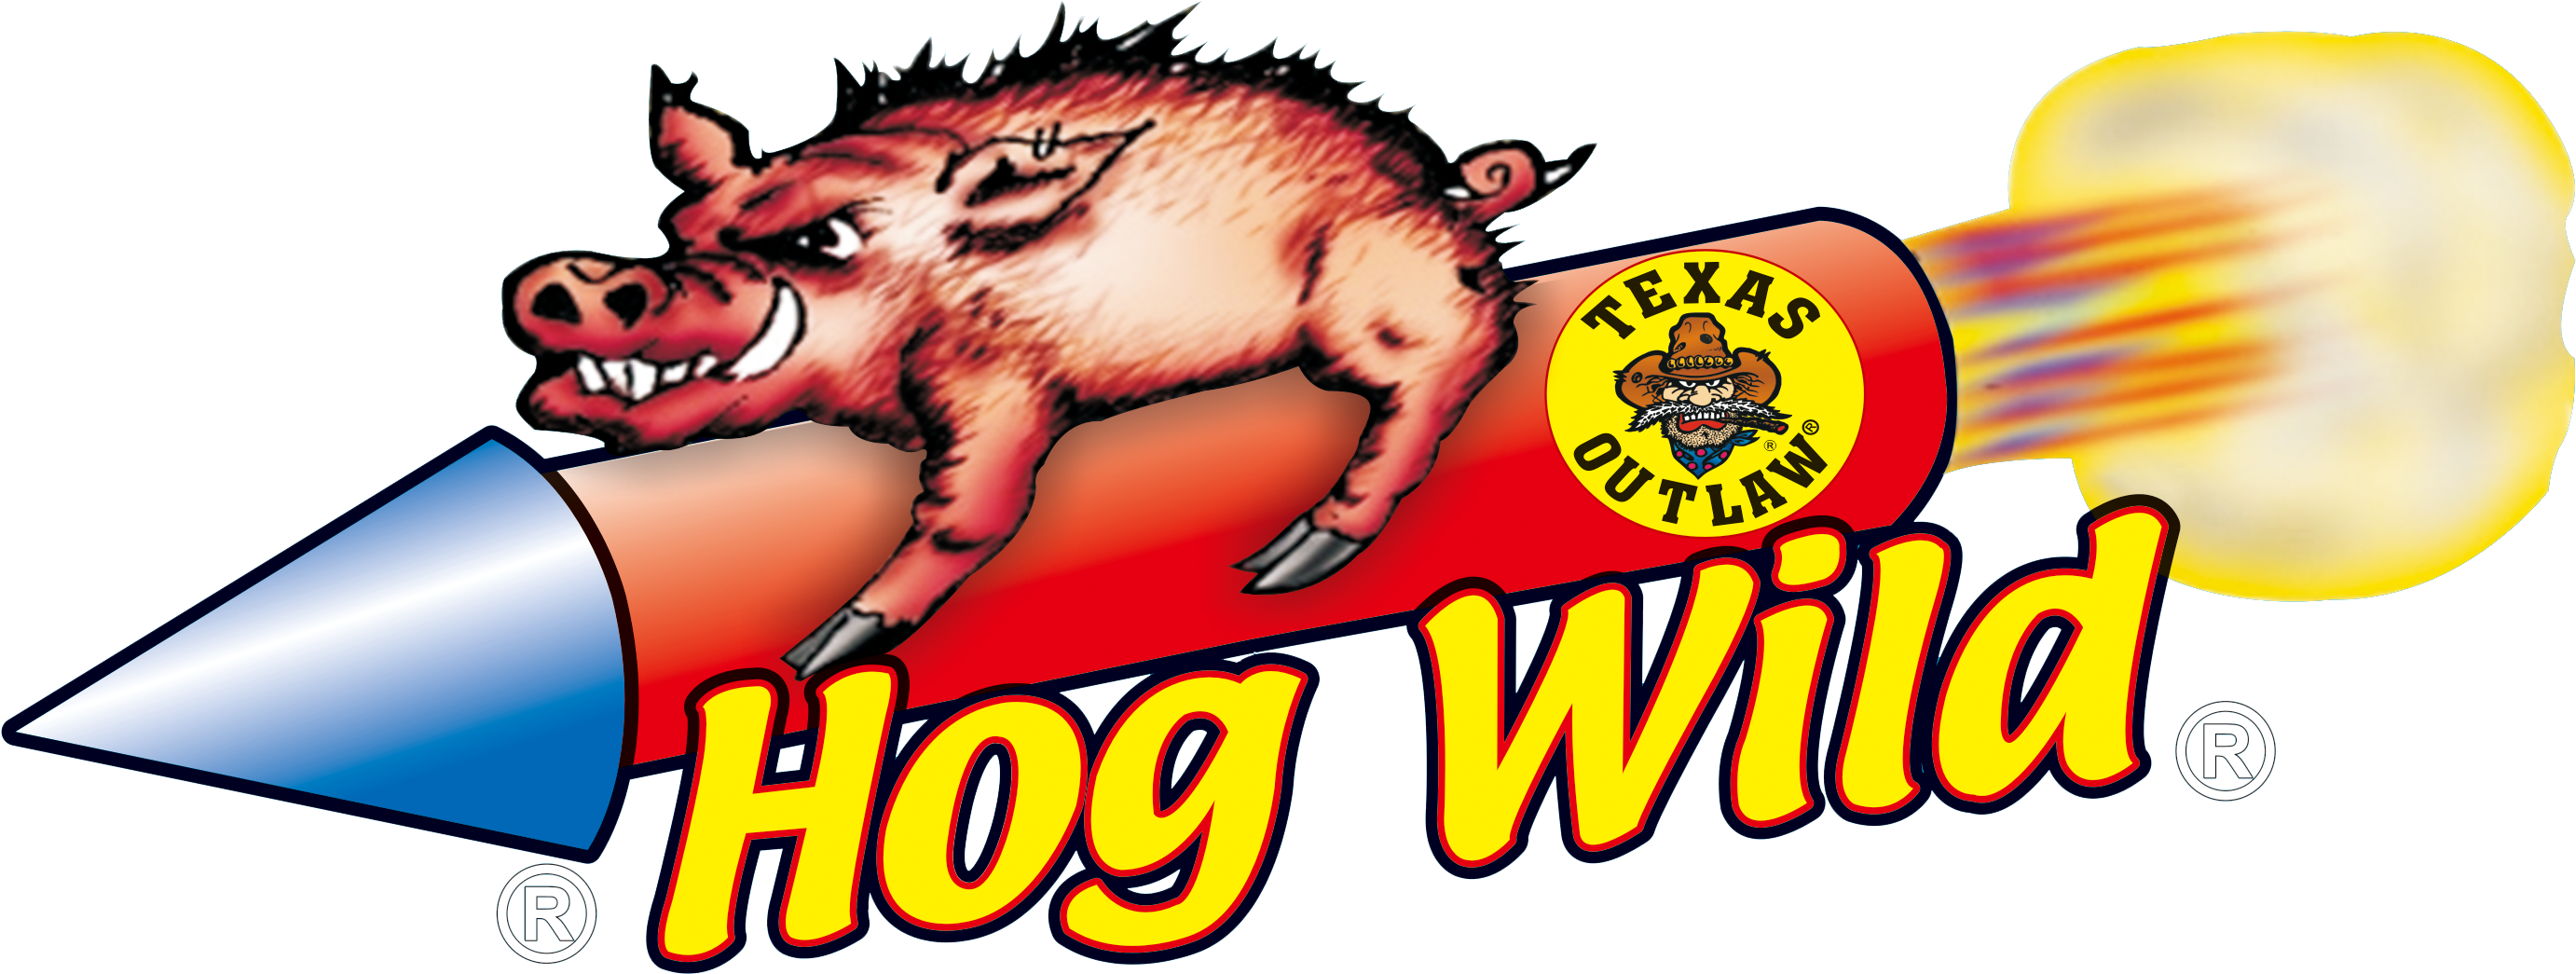 Hog Wild Fireworks Logo Hog Wild Fireworks